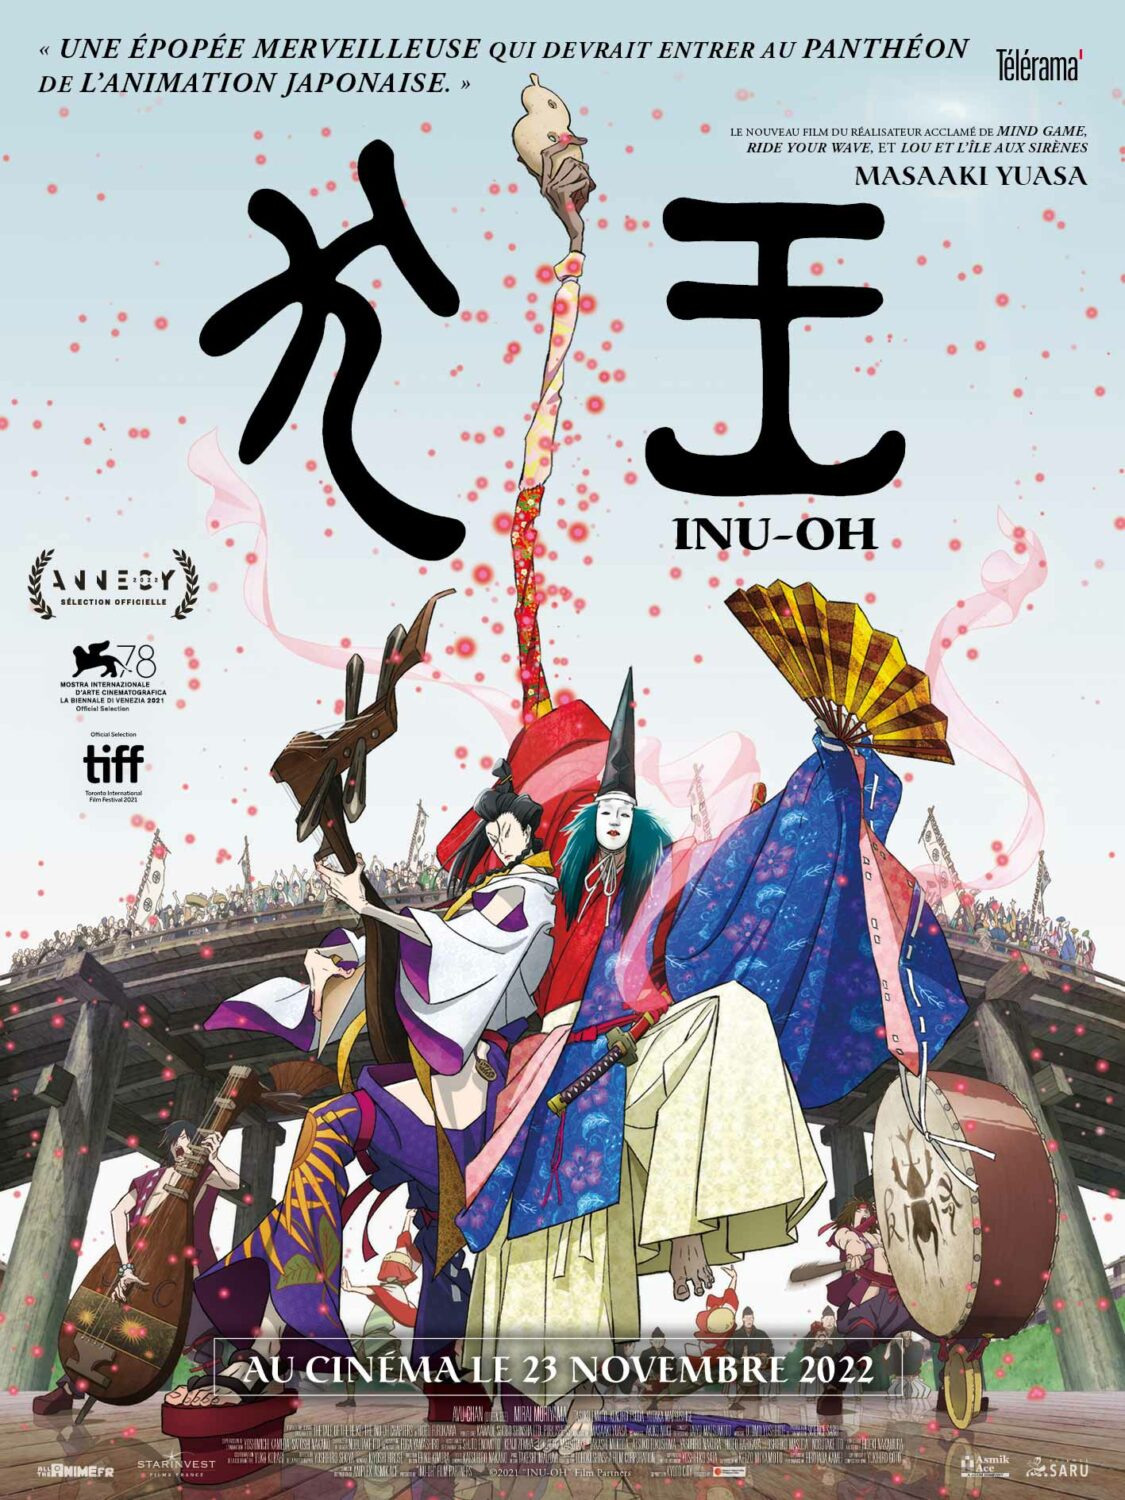 Inu-Oh, film d'animation de Yuasa Masaaki sortira dans les salles en France  le 23 novembre 2022 | DozoDomo